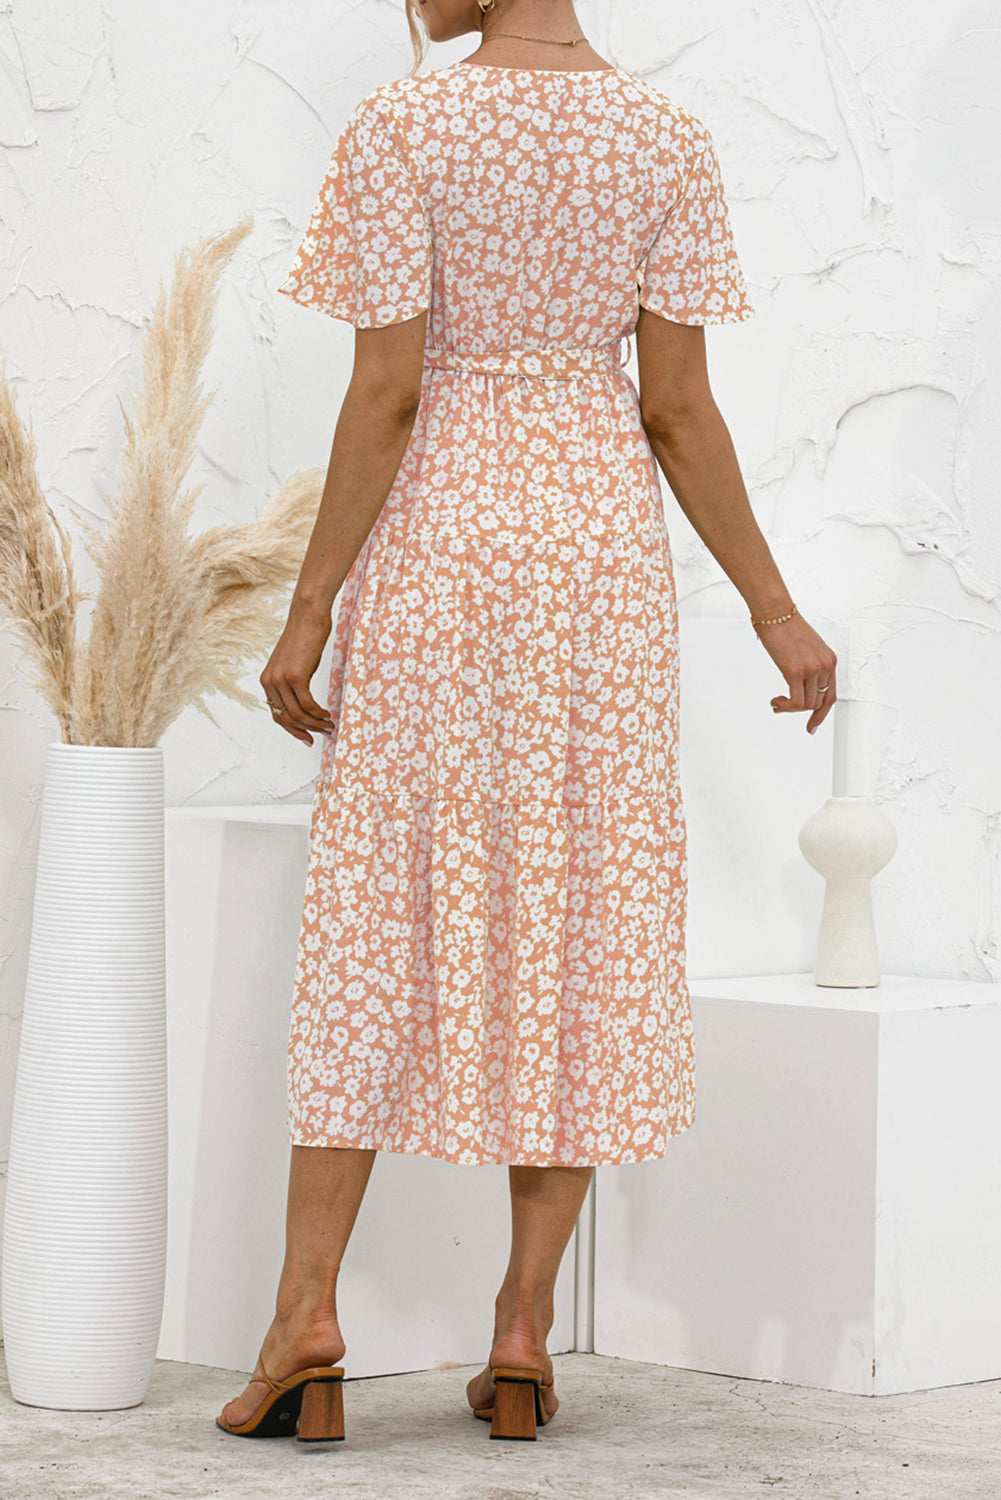 Apricot Women's Dresses Floral Polka Dot Belted Midi Dress LC229317-18